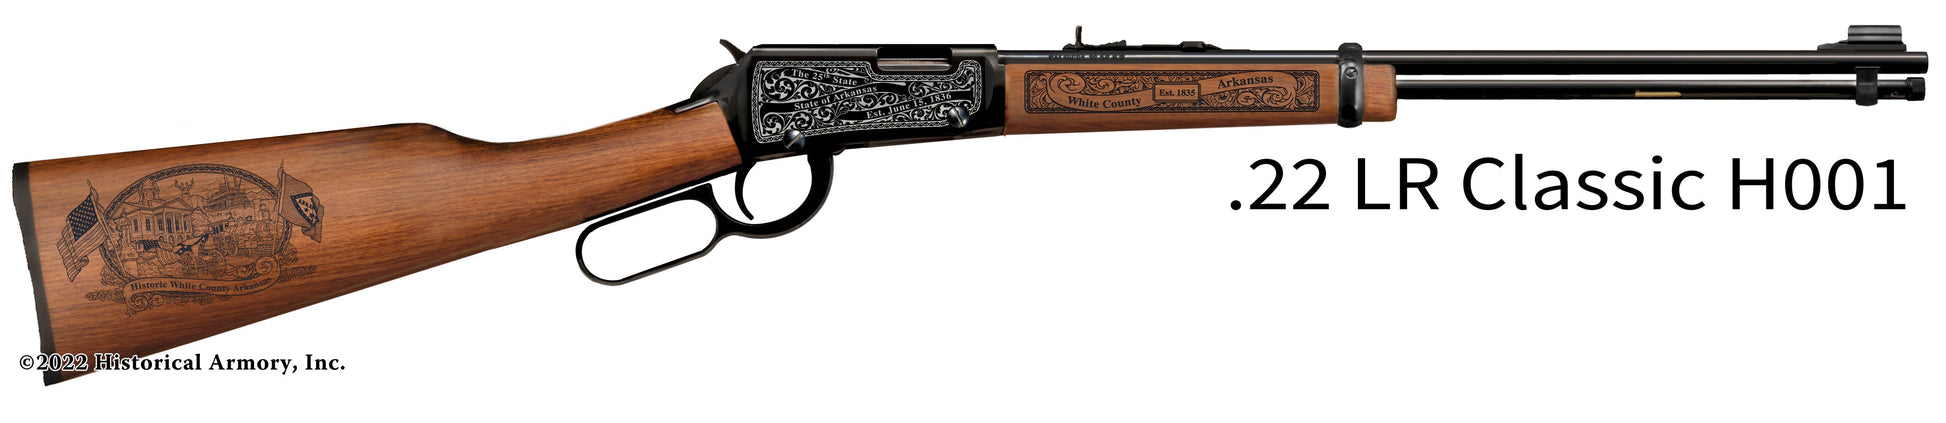 White County Arkansas Engraved Henry H001 Rifle